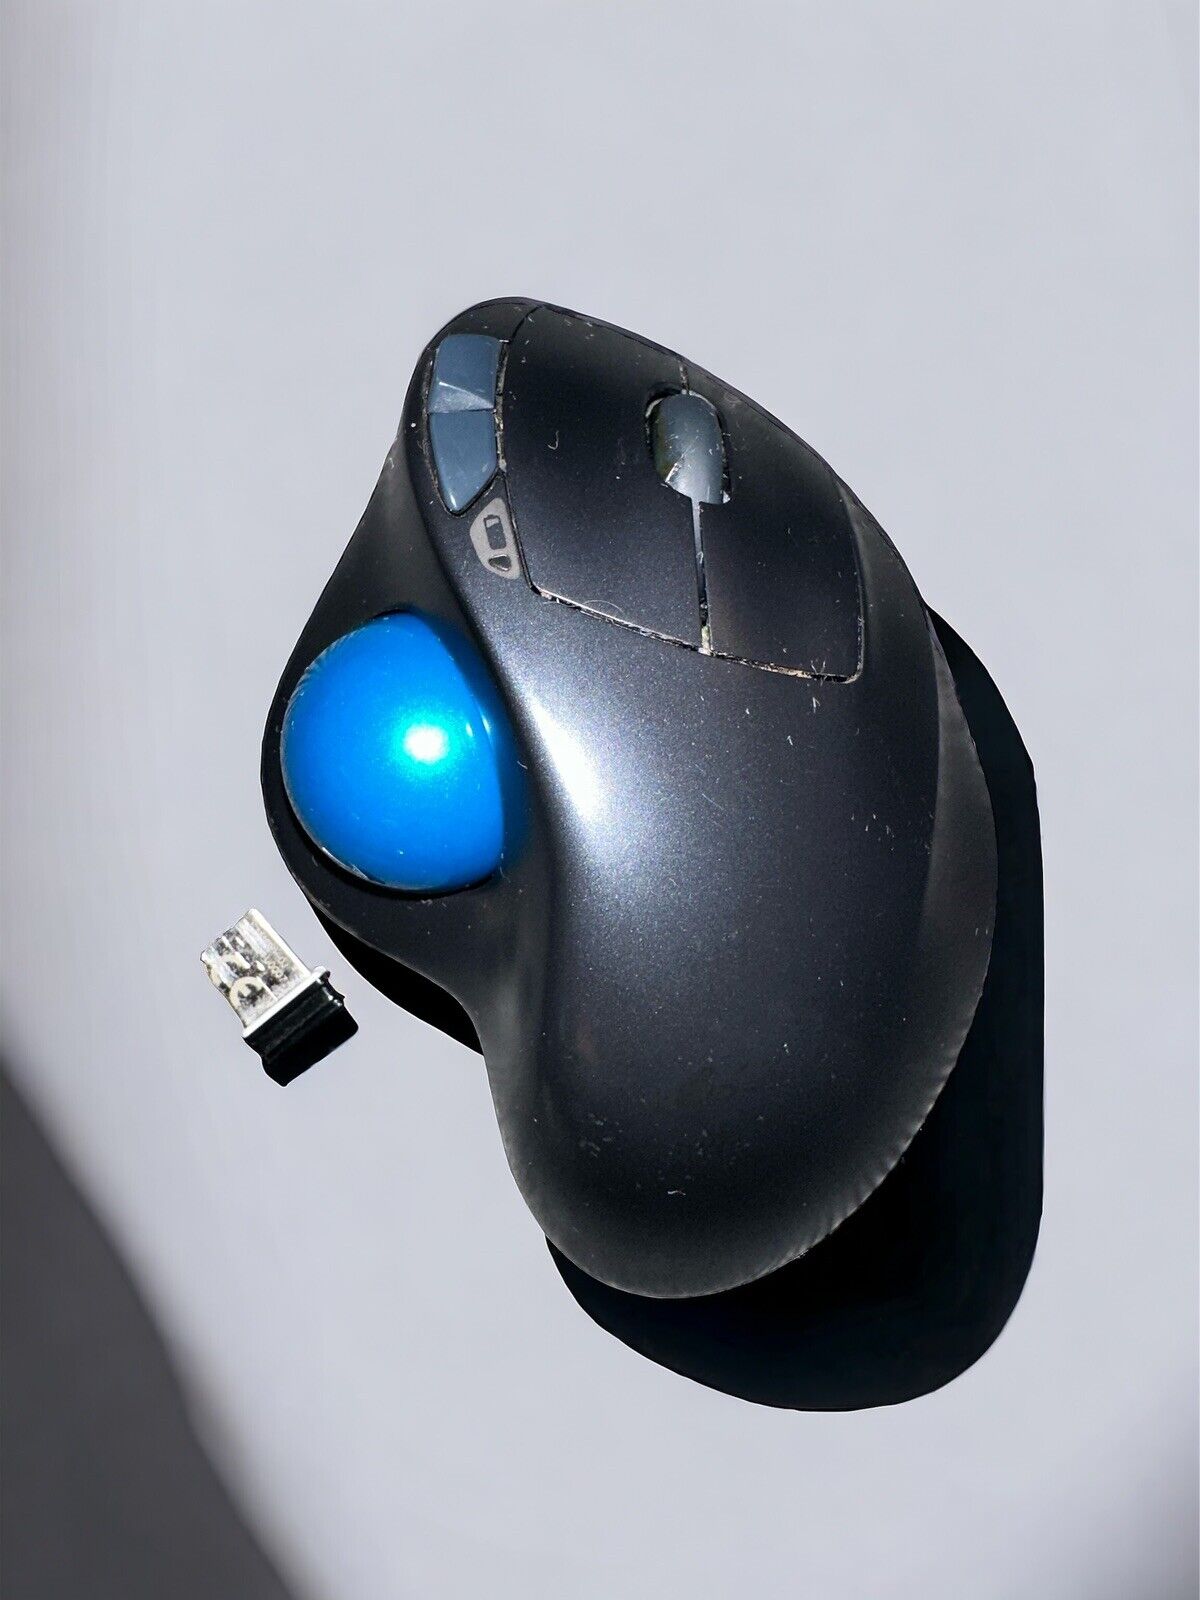 Logitech M570 Wireless USB Gray Trackball Mouse w/USB Dongle Receiver Working